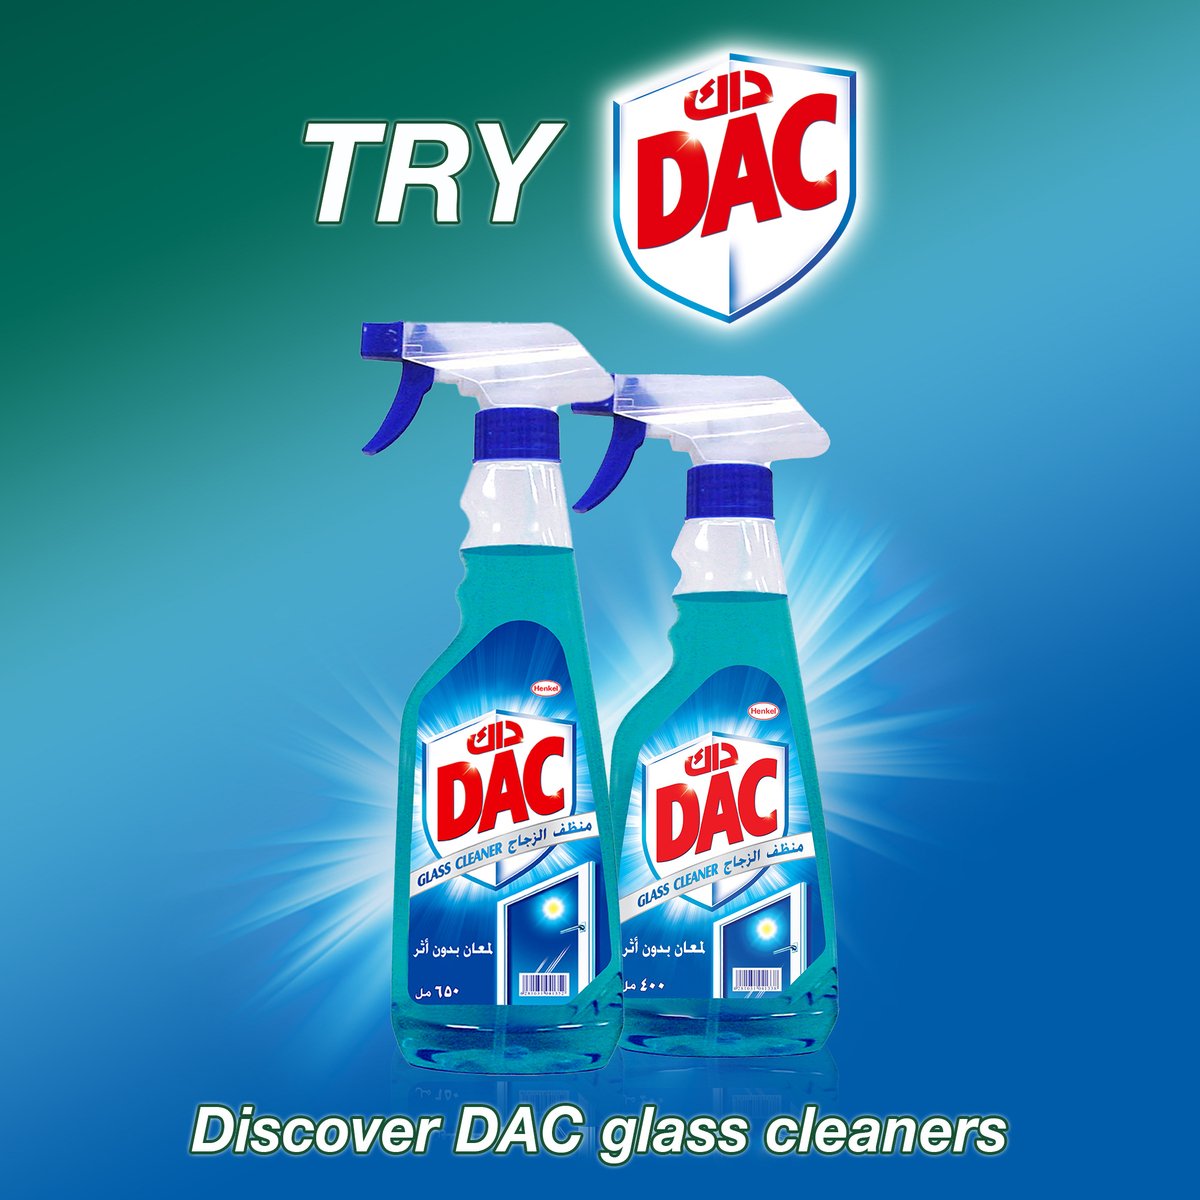 Dac Glass Cleaner 400 ml